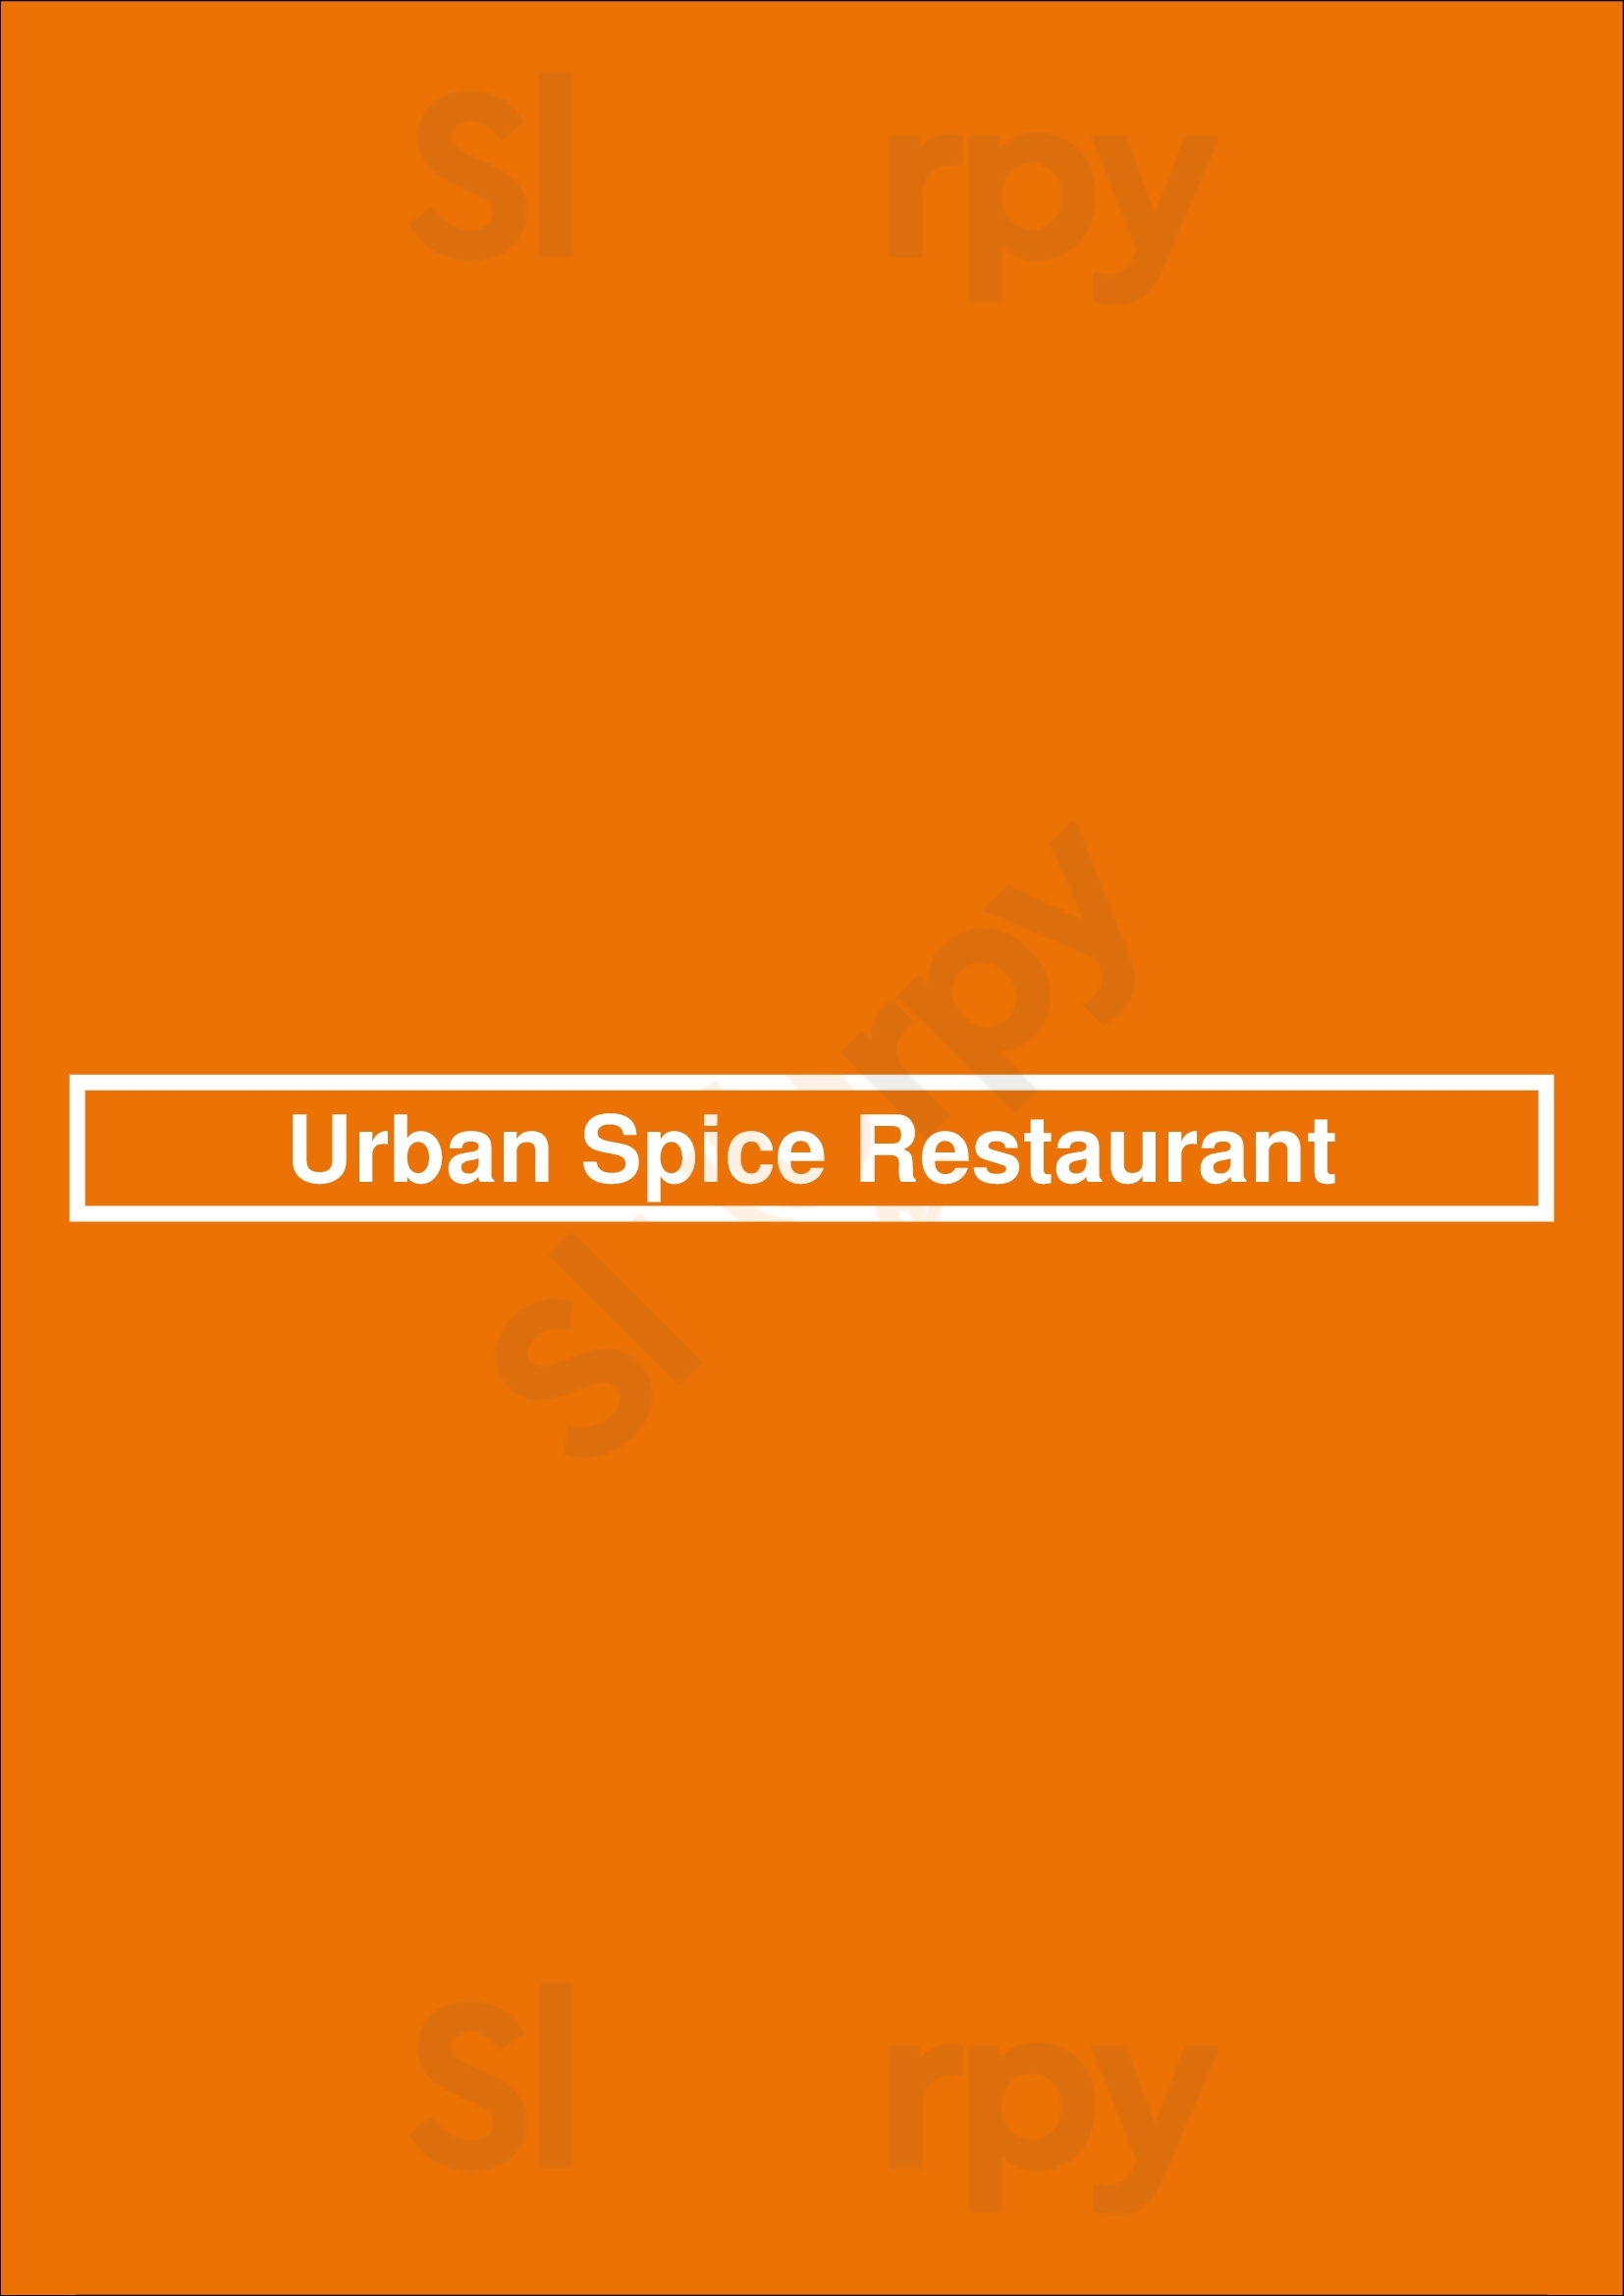 Urban Spice Restaurant Saskatoon Menu - 1